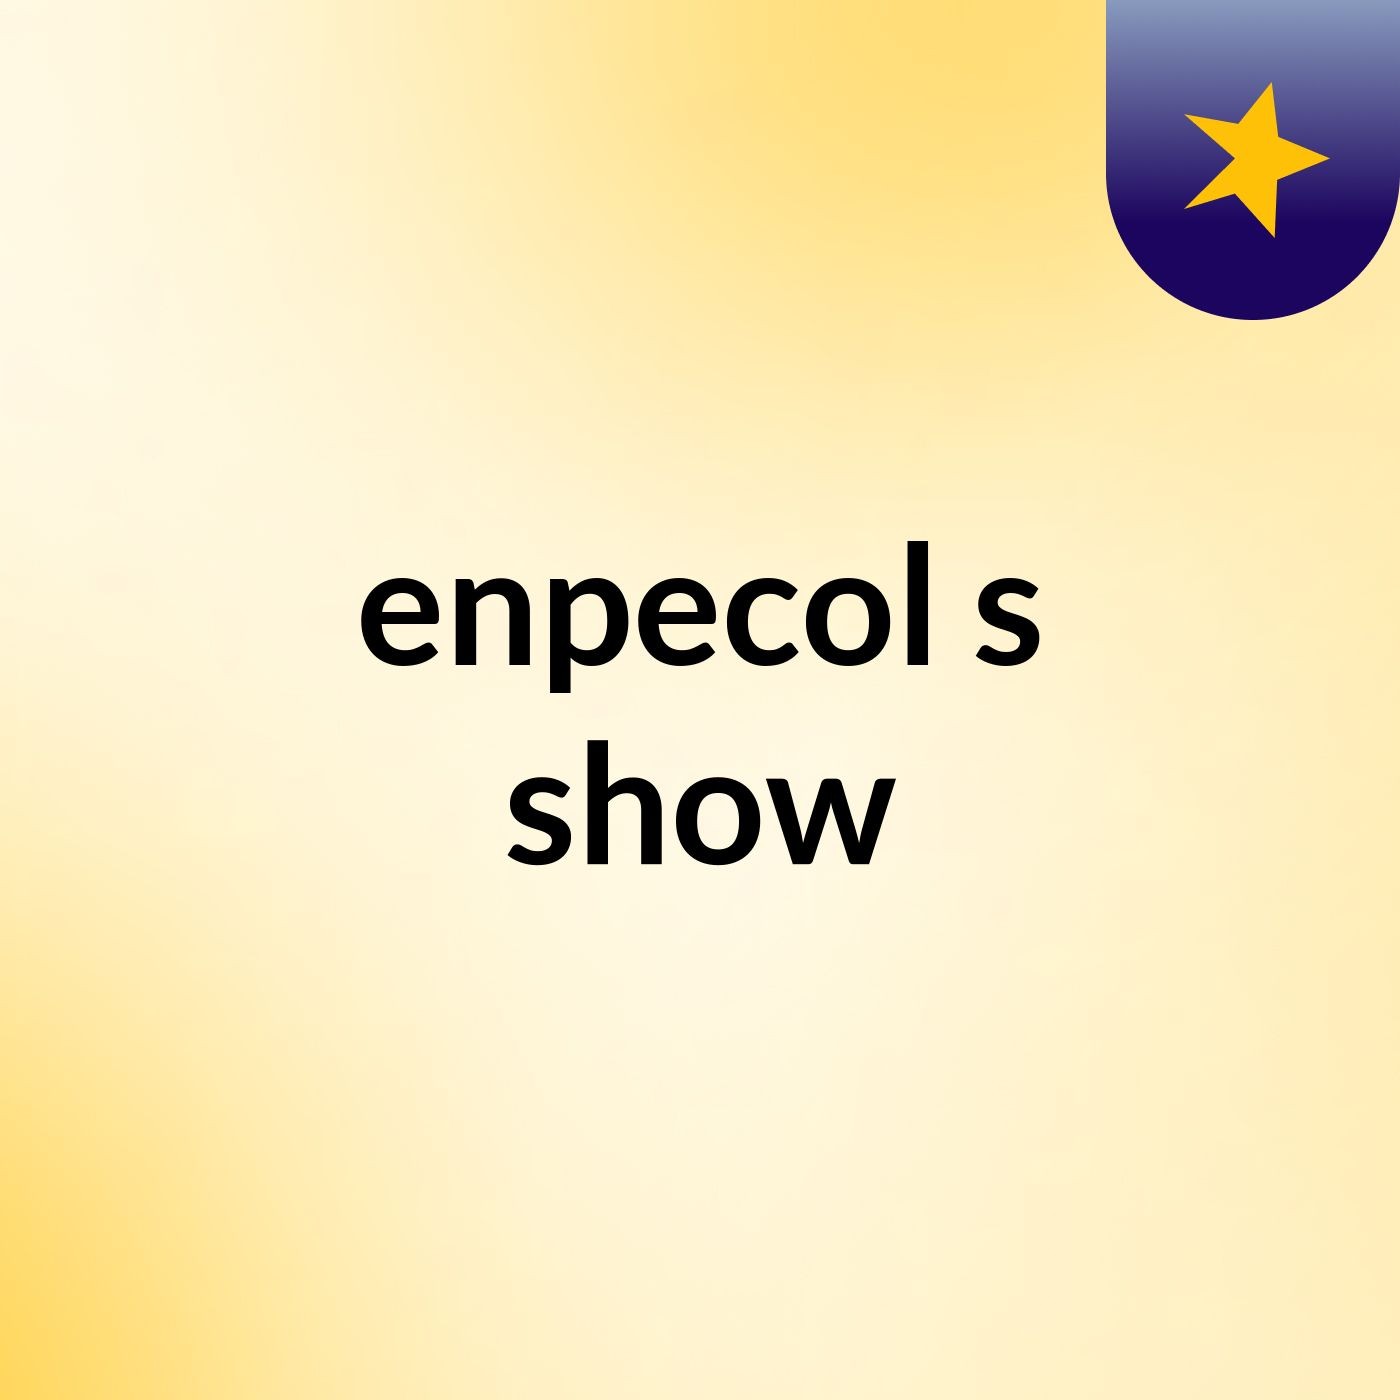 enpecol's show